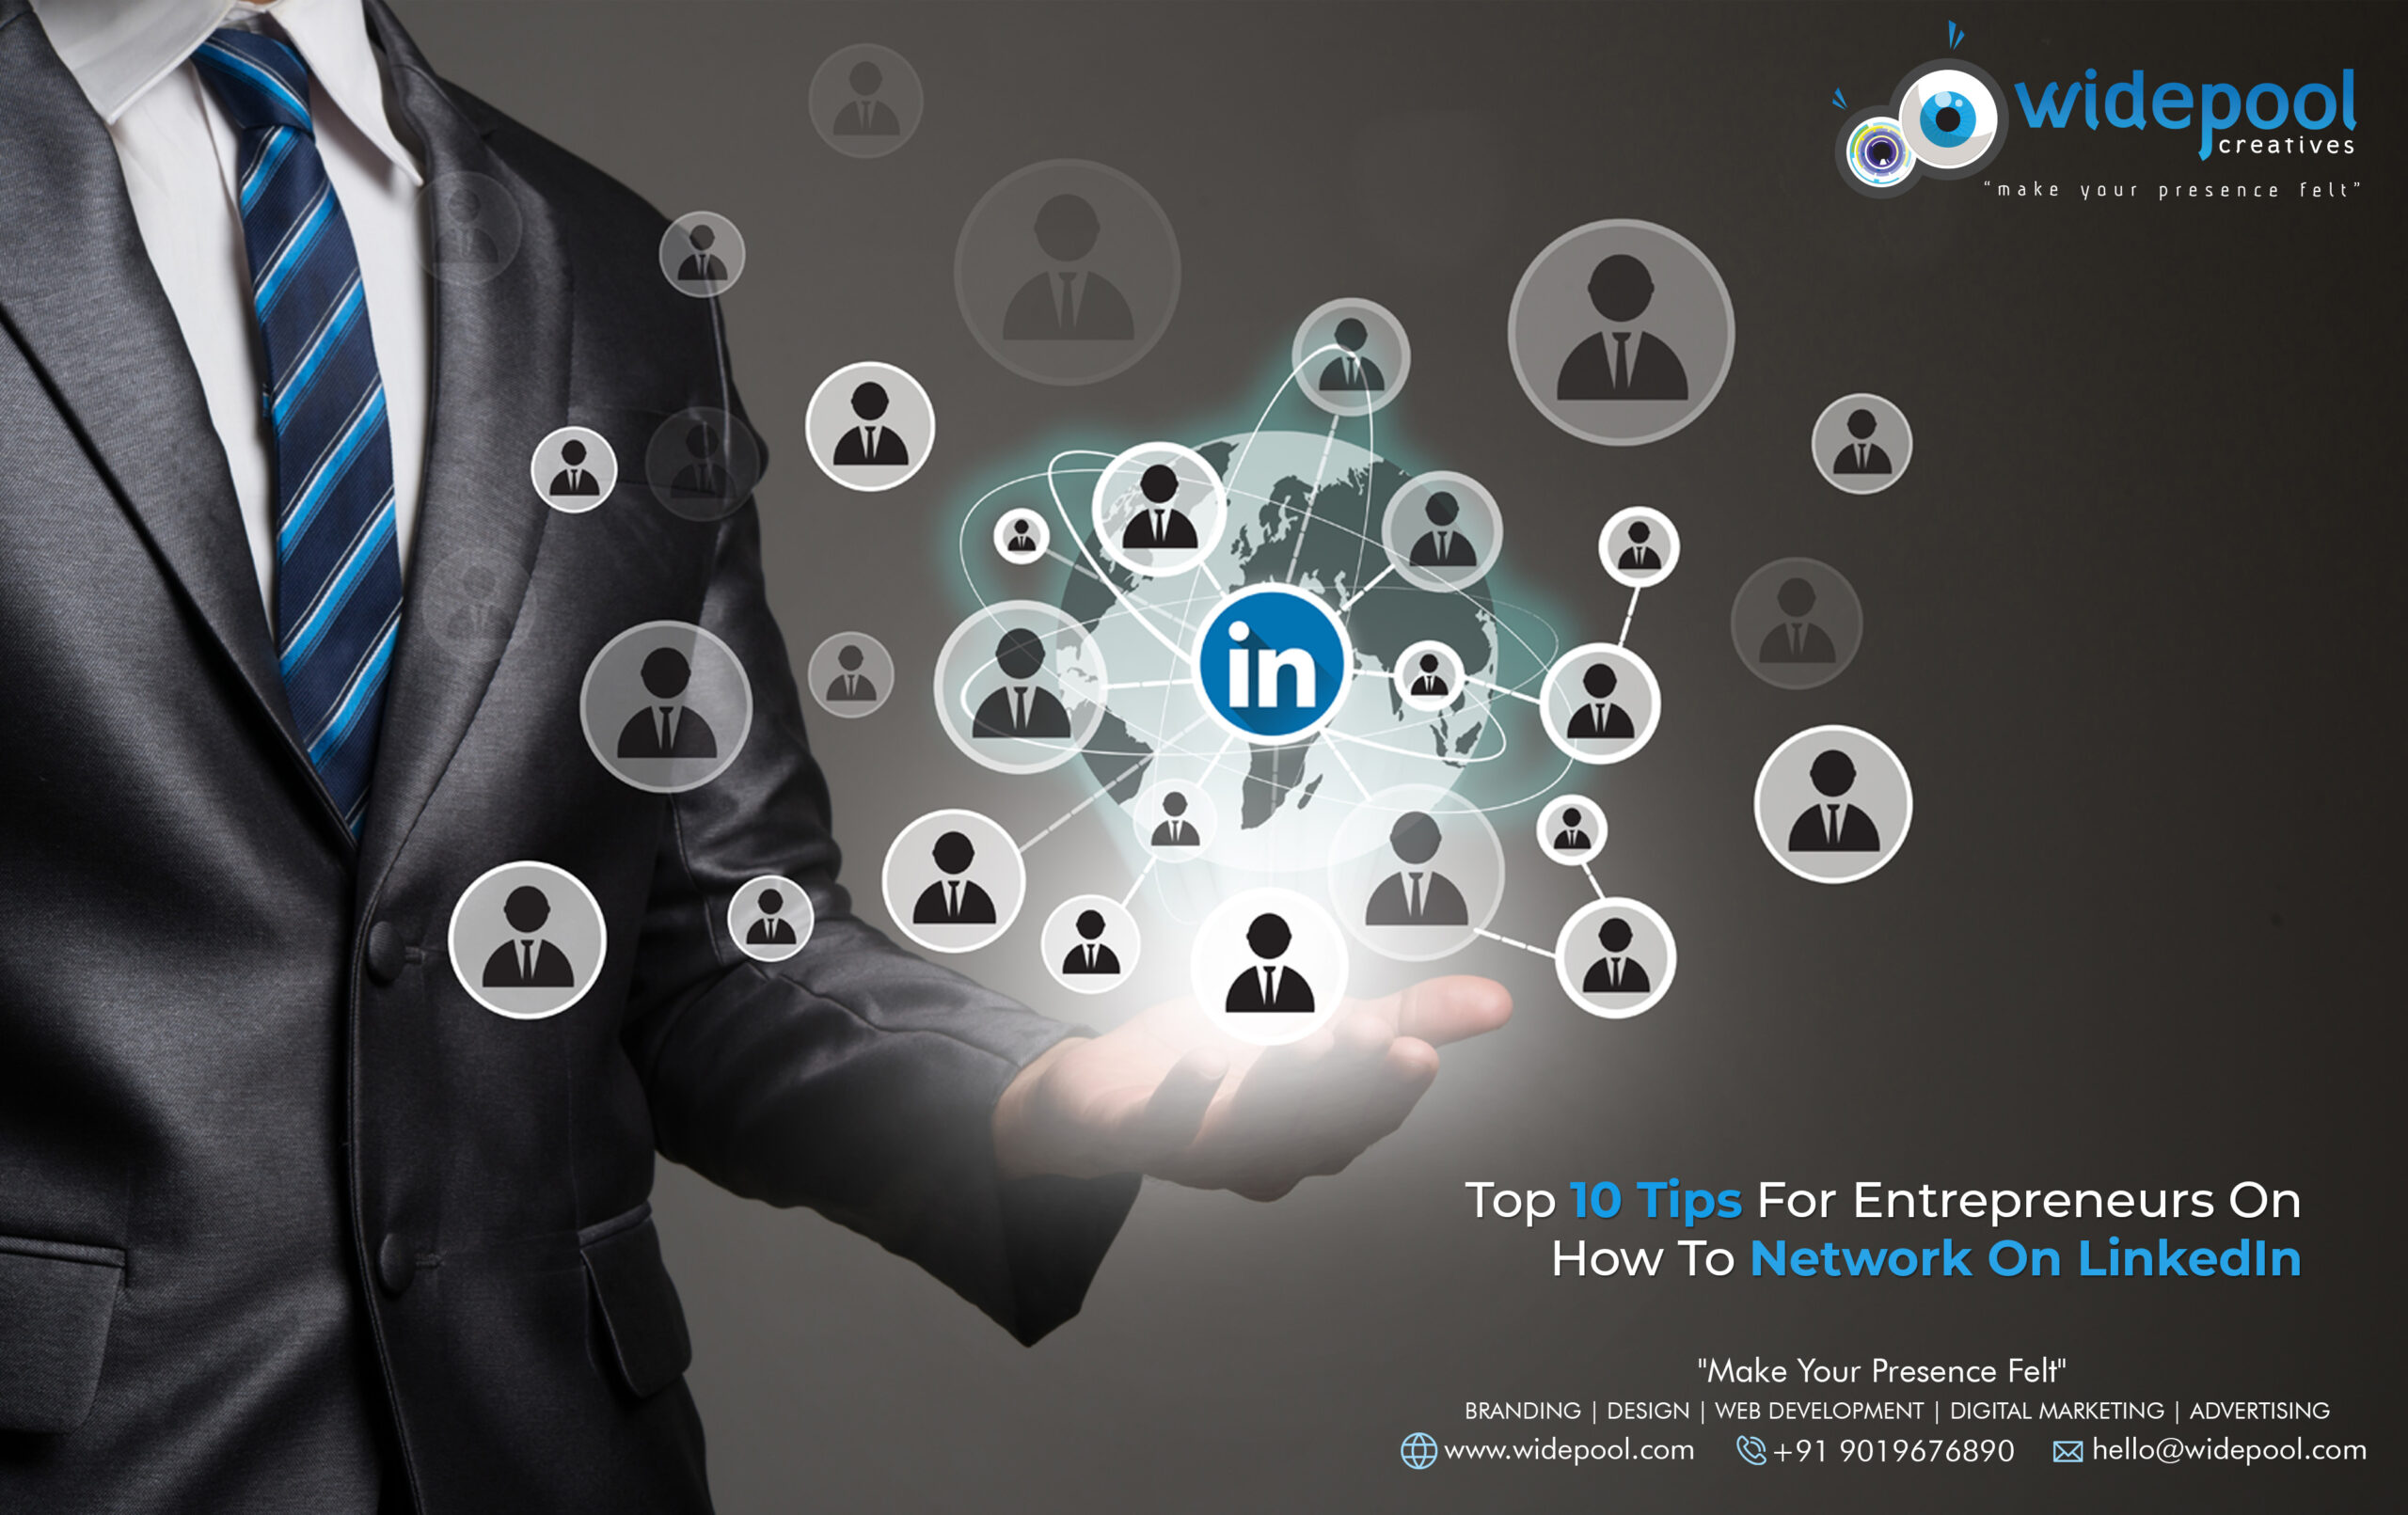 Top 10 Tips For Entrepreneurs On How To Network On LinkedIn!